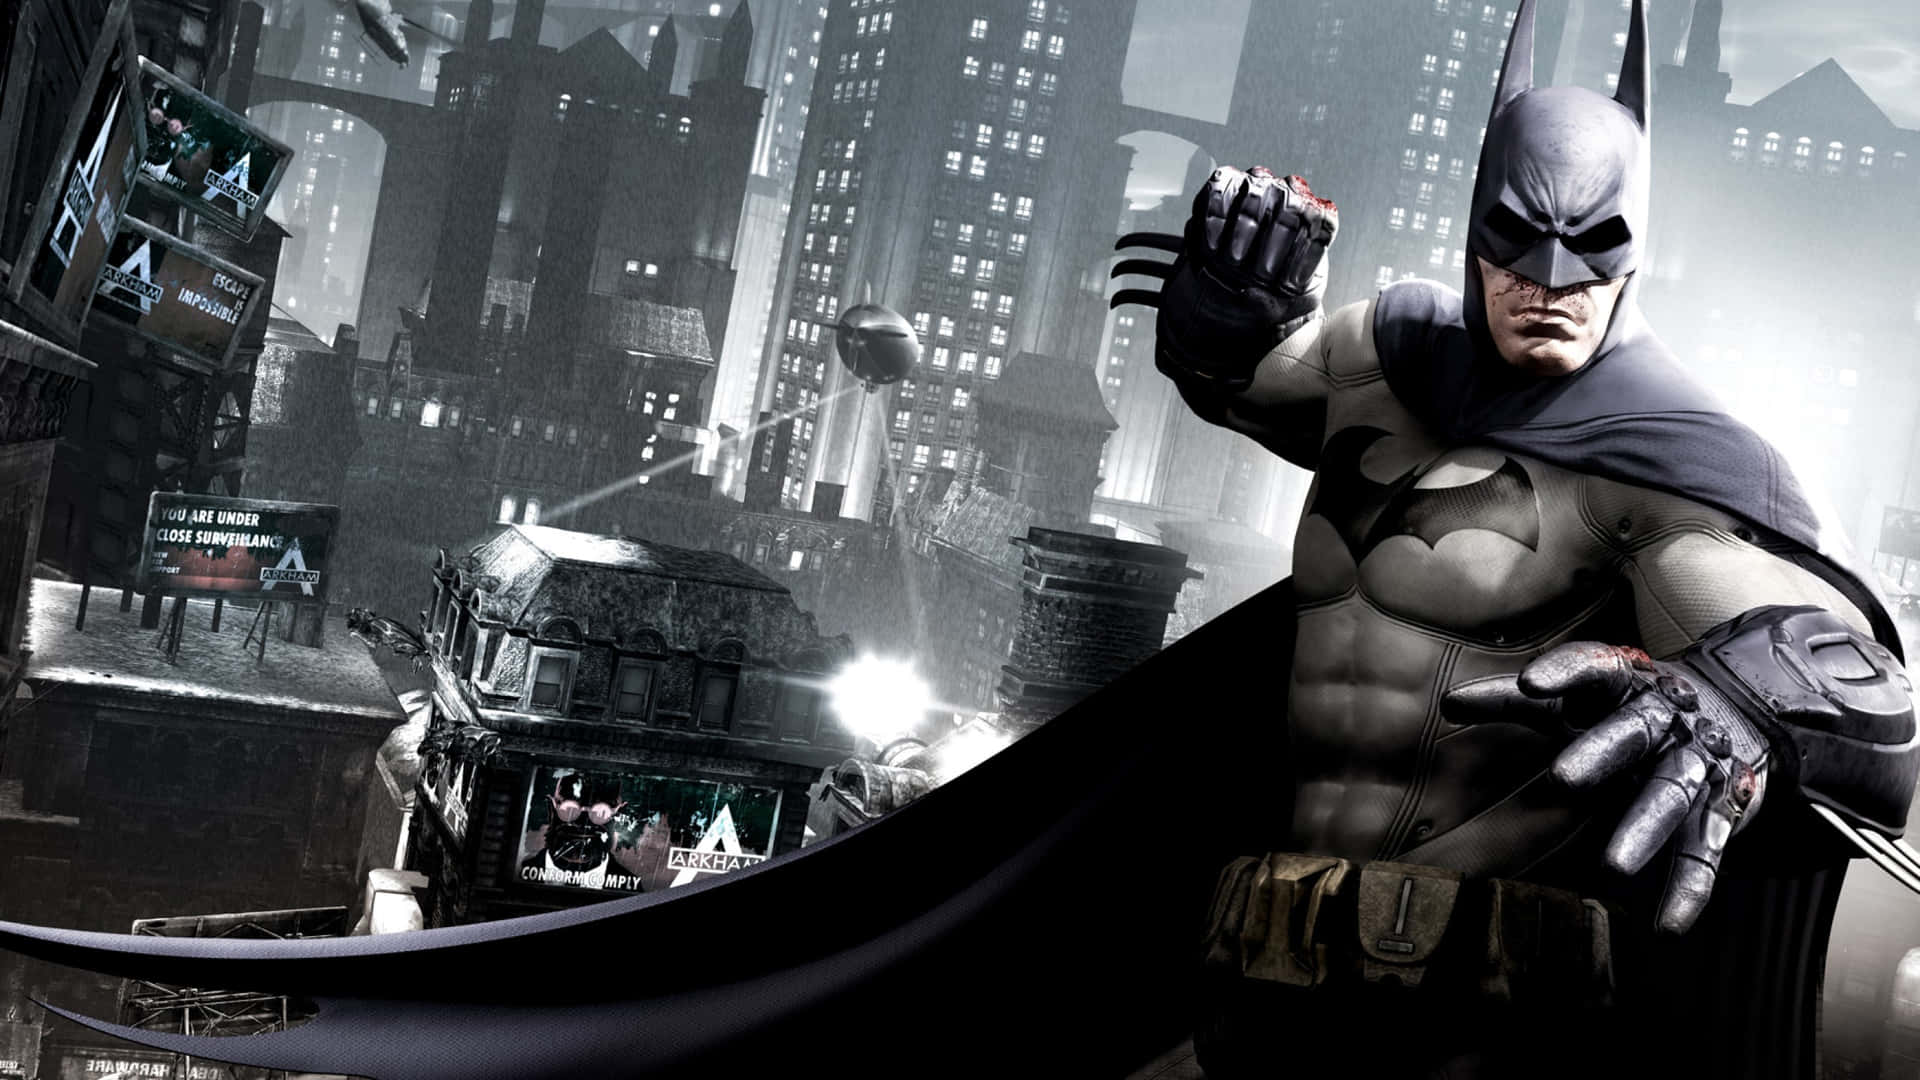 Batman standing in a powerful pose Wallpaper